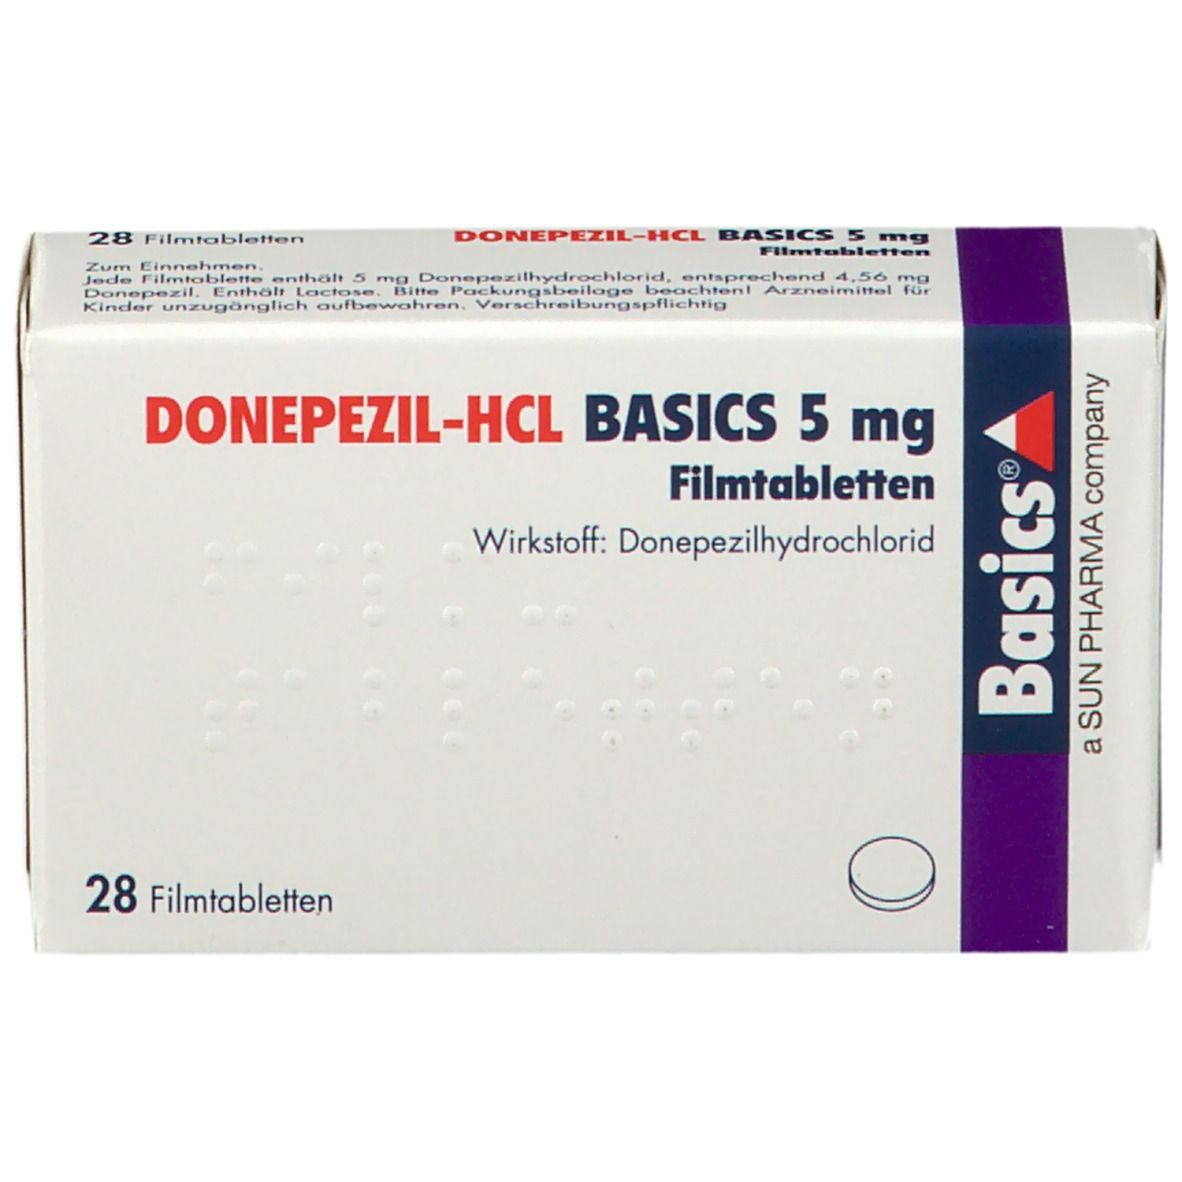 DONEPEZIL-HCL BASICS 5 mg